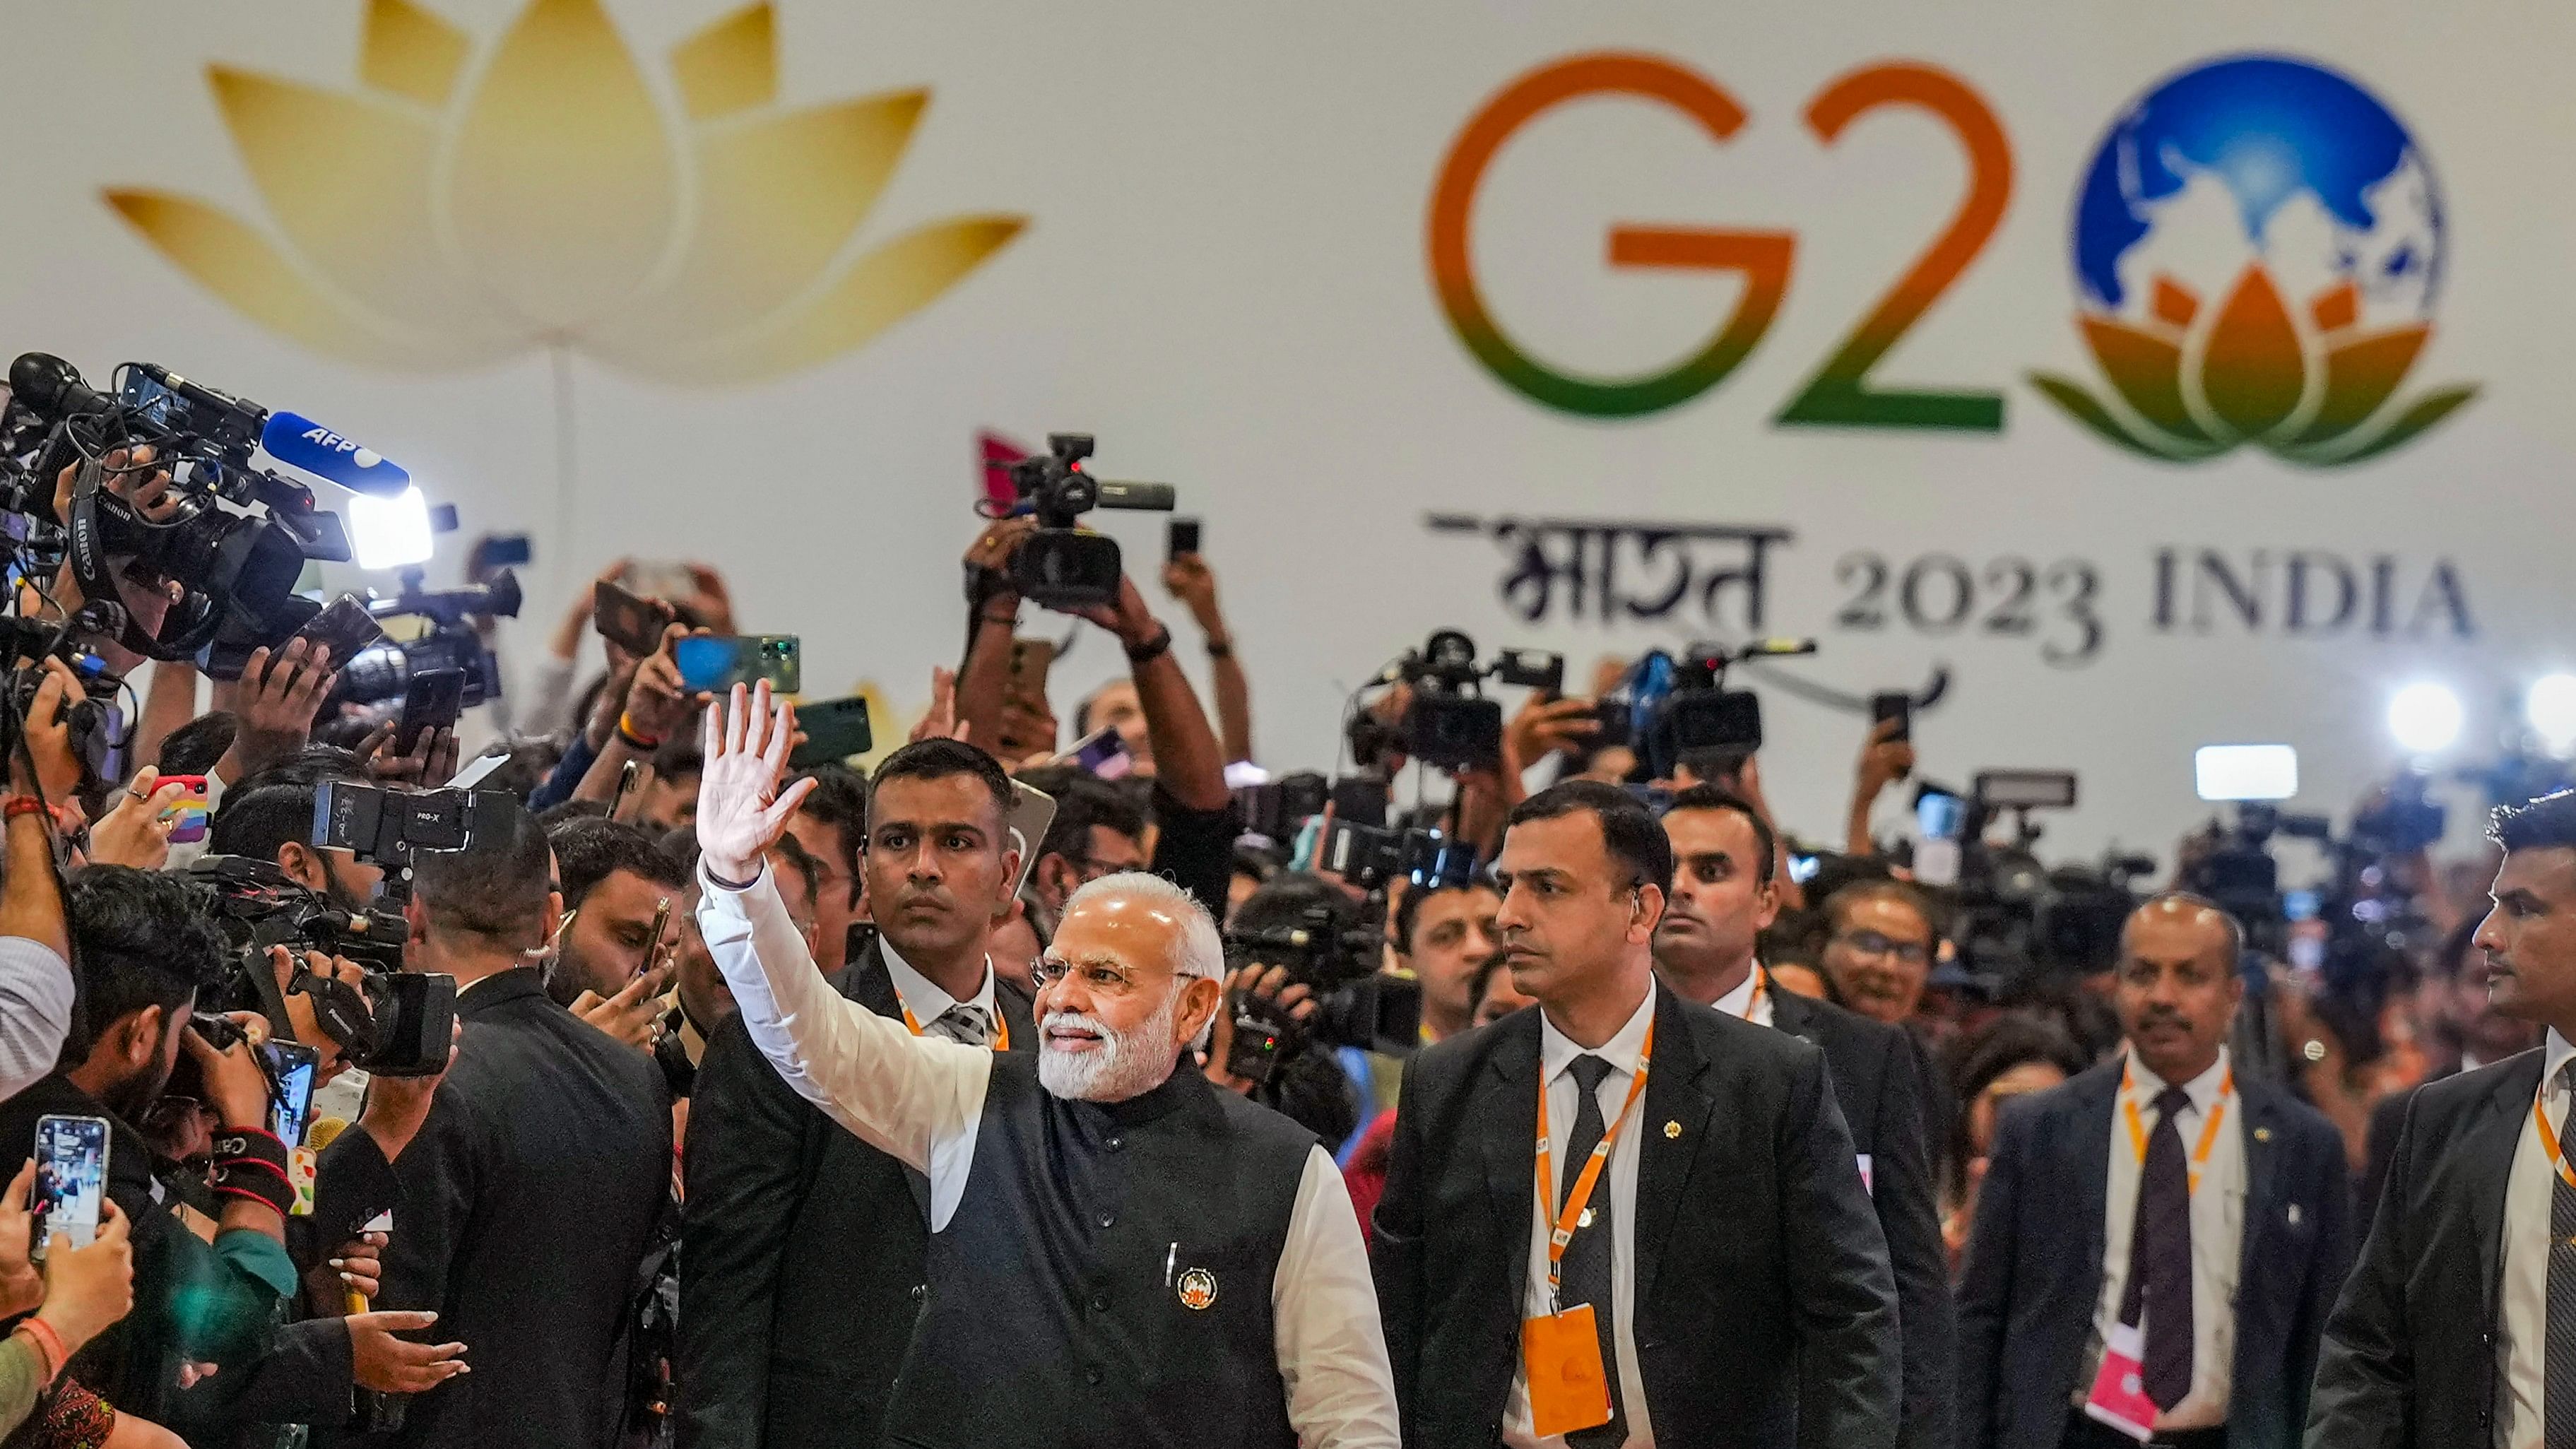 <div class="paragraphs"><p>Prime Minister Narendra Modi at the International Media Centre at the G20 Summit venue Bharat Mandapam, in New Delhi, Sunday, Sept. 10, 2023.</p></div>